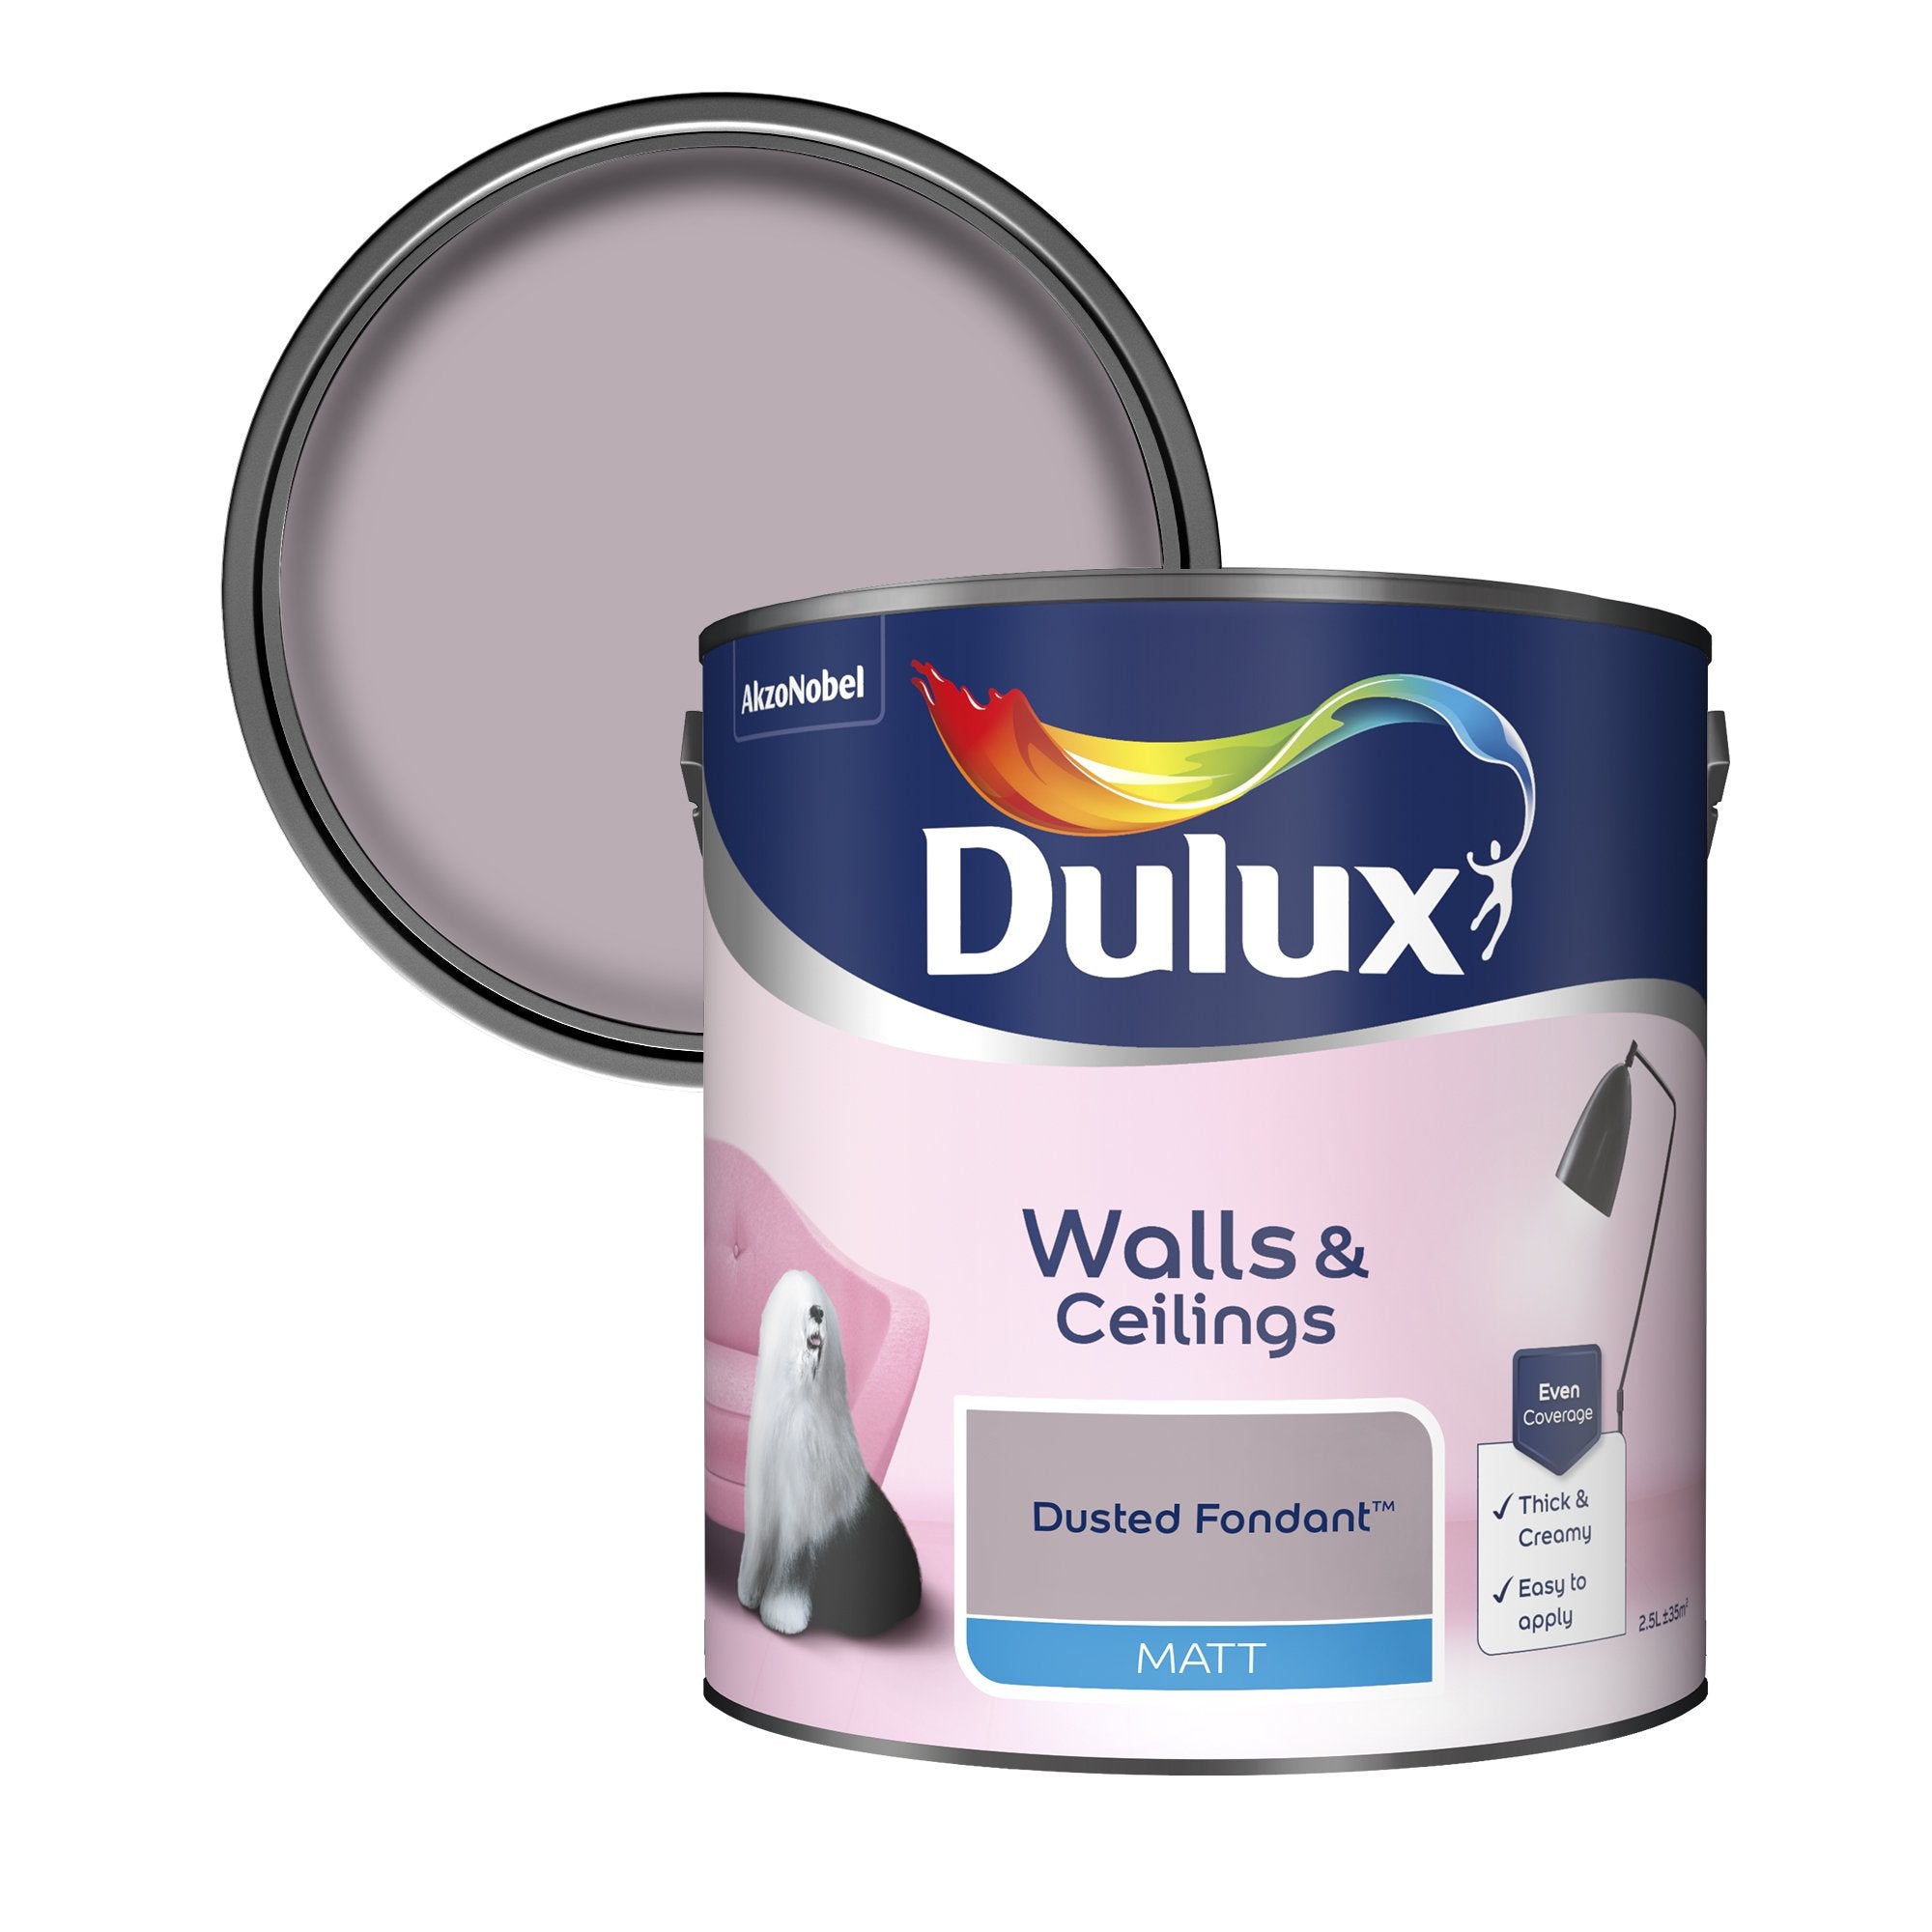 Dulux-Matt-Emulsion-Paint-For-Walls-And-Ceilings-Dusted-Fondant-2.5L